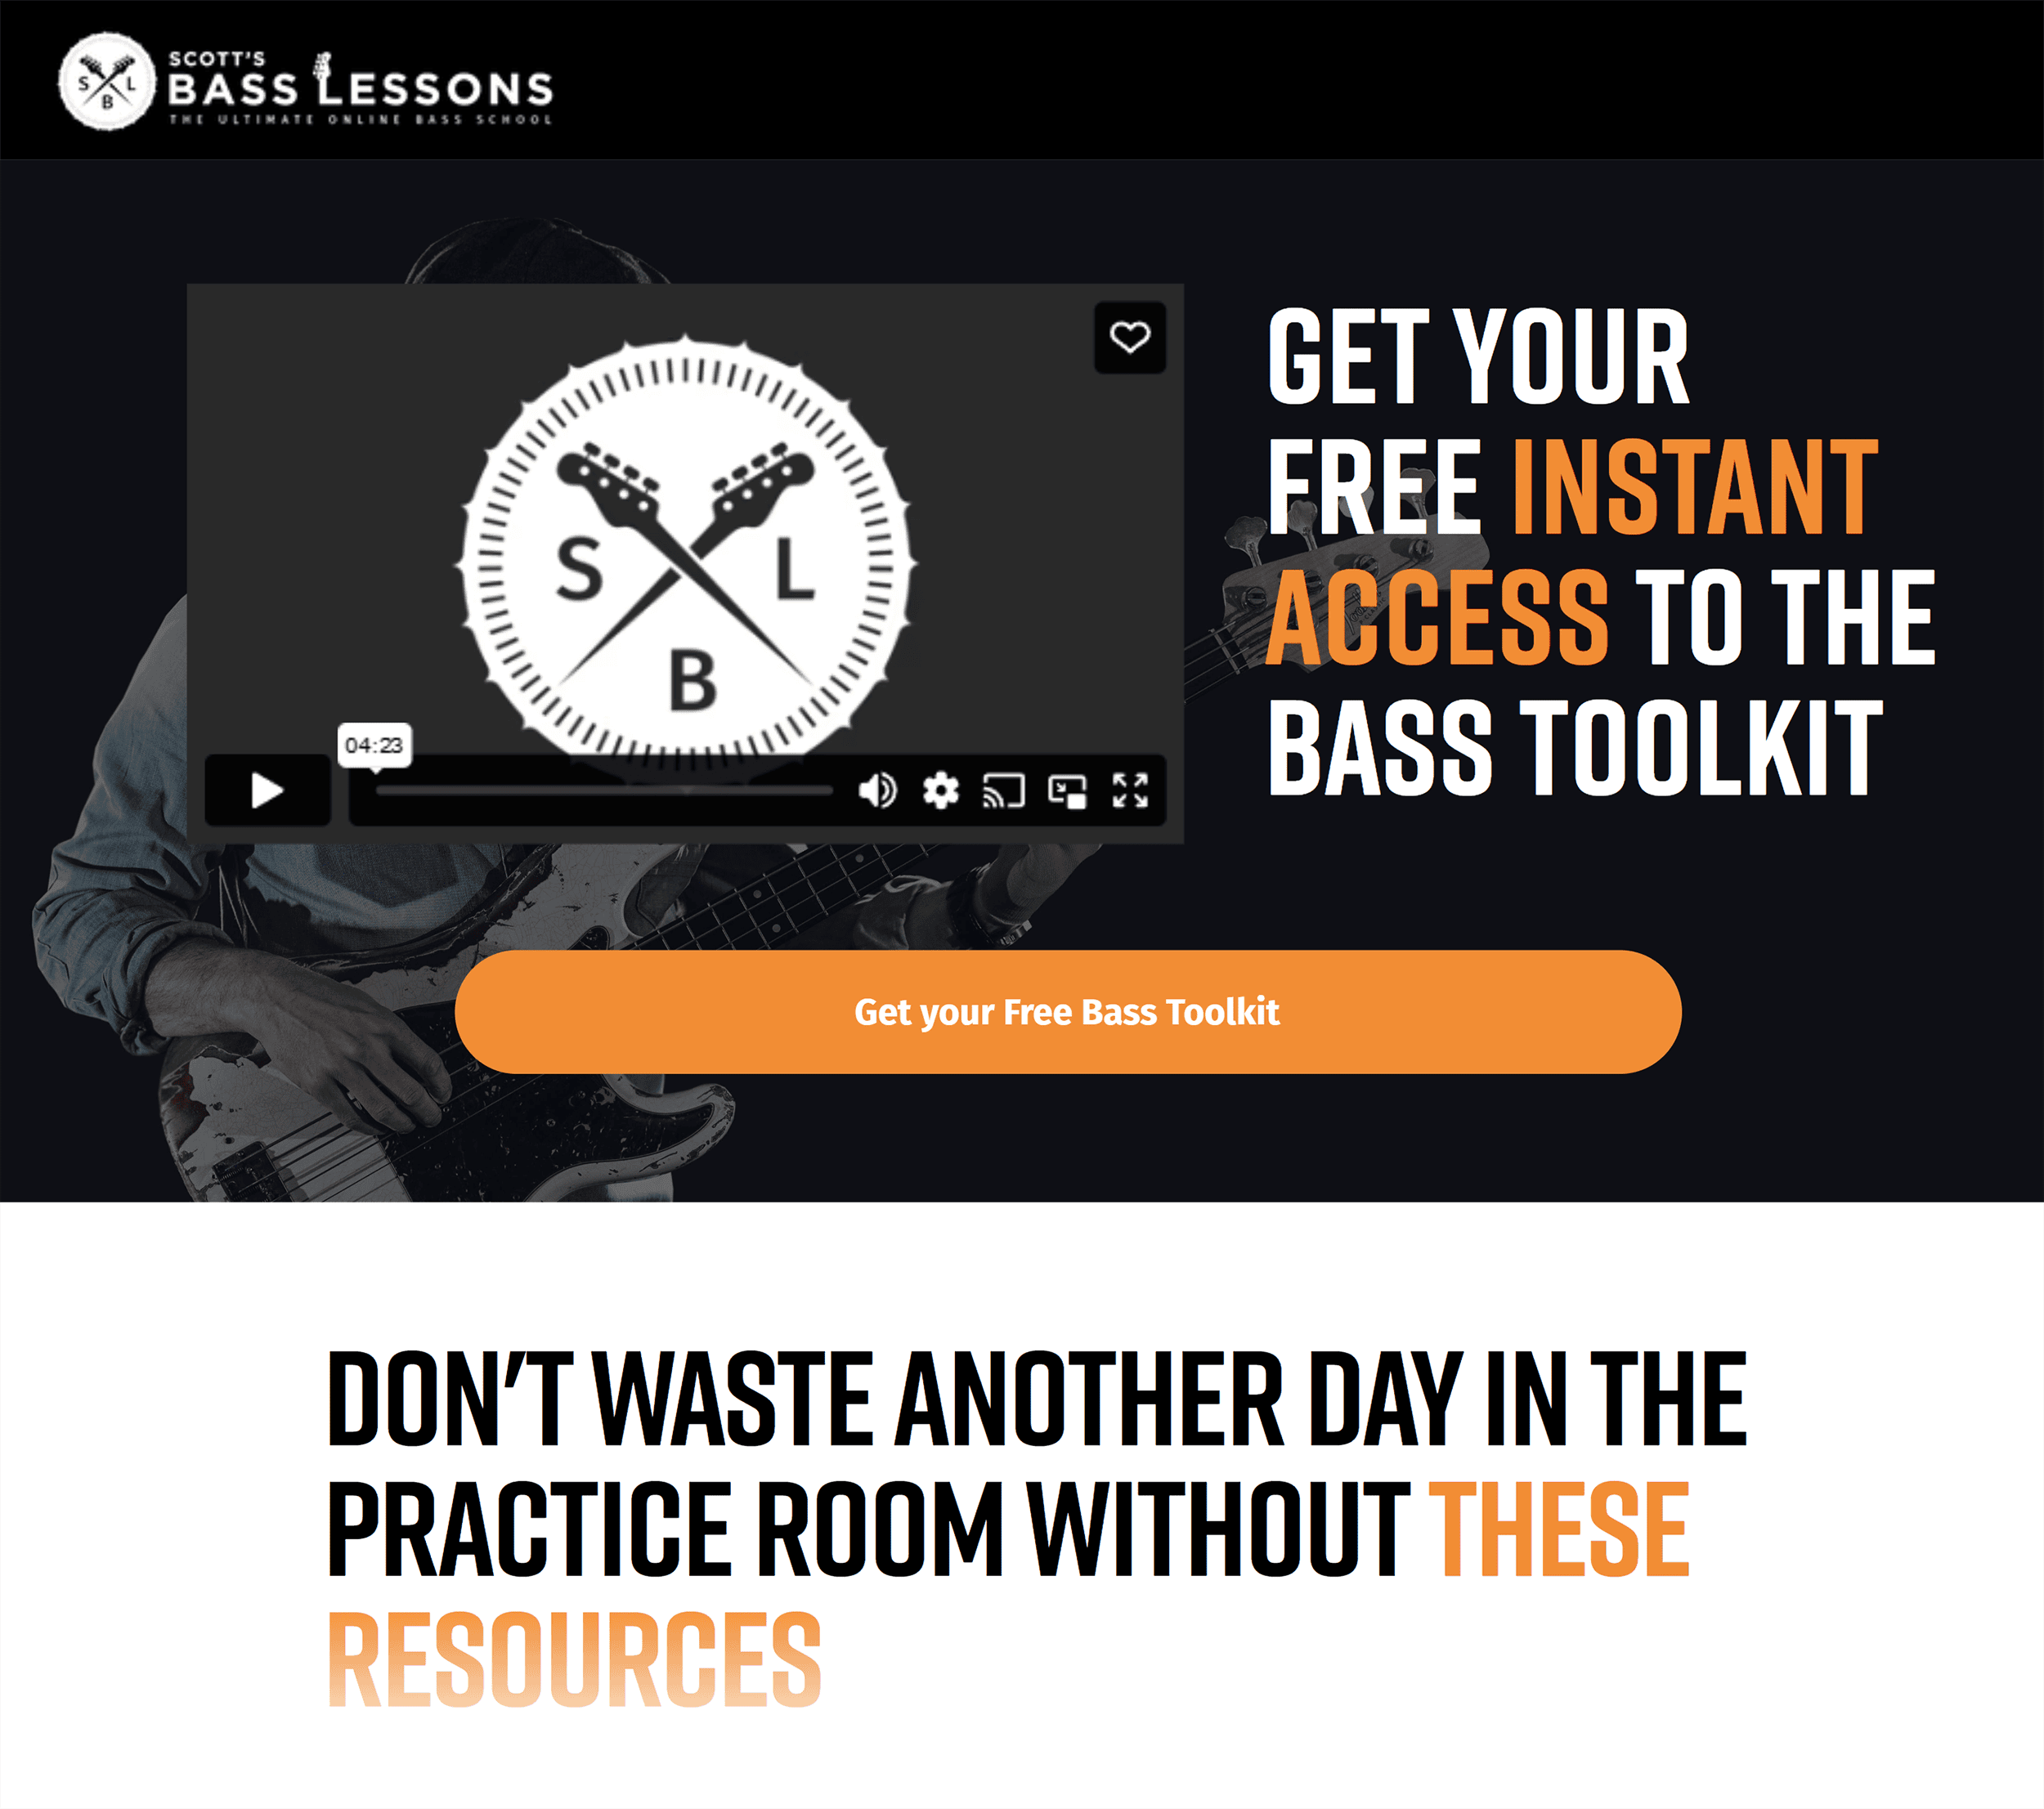 Scott's Bass Lessons – Free bass toolkit